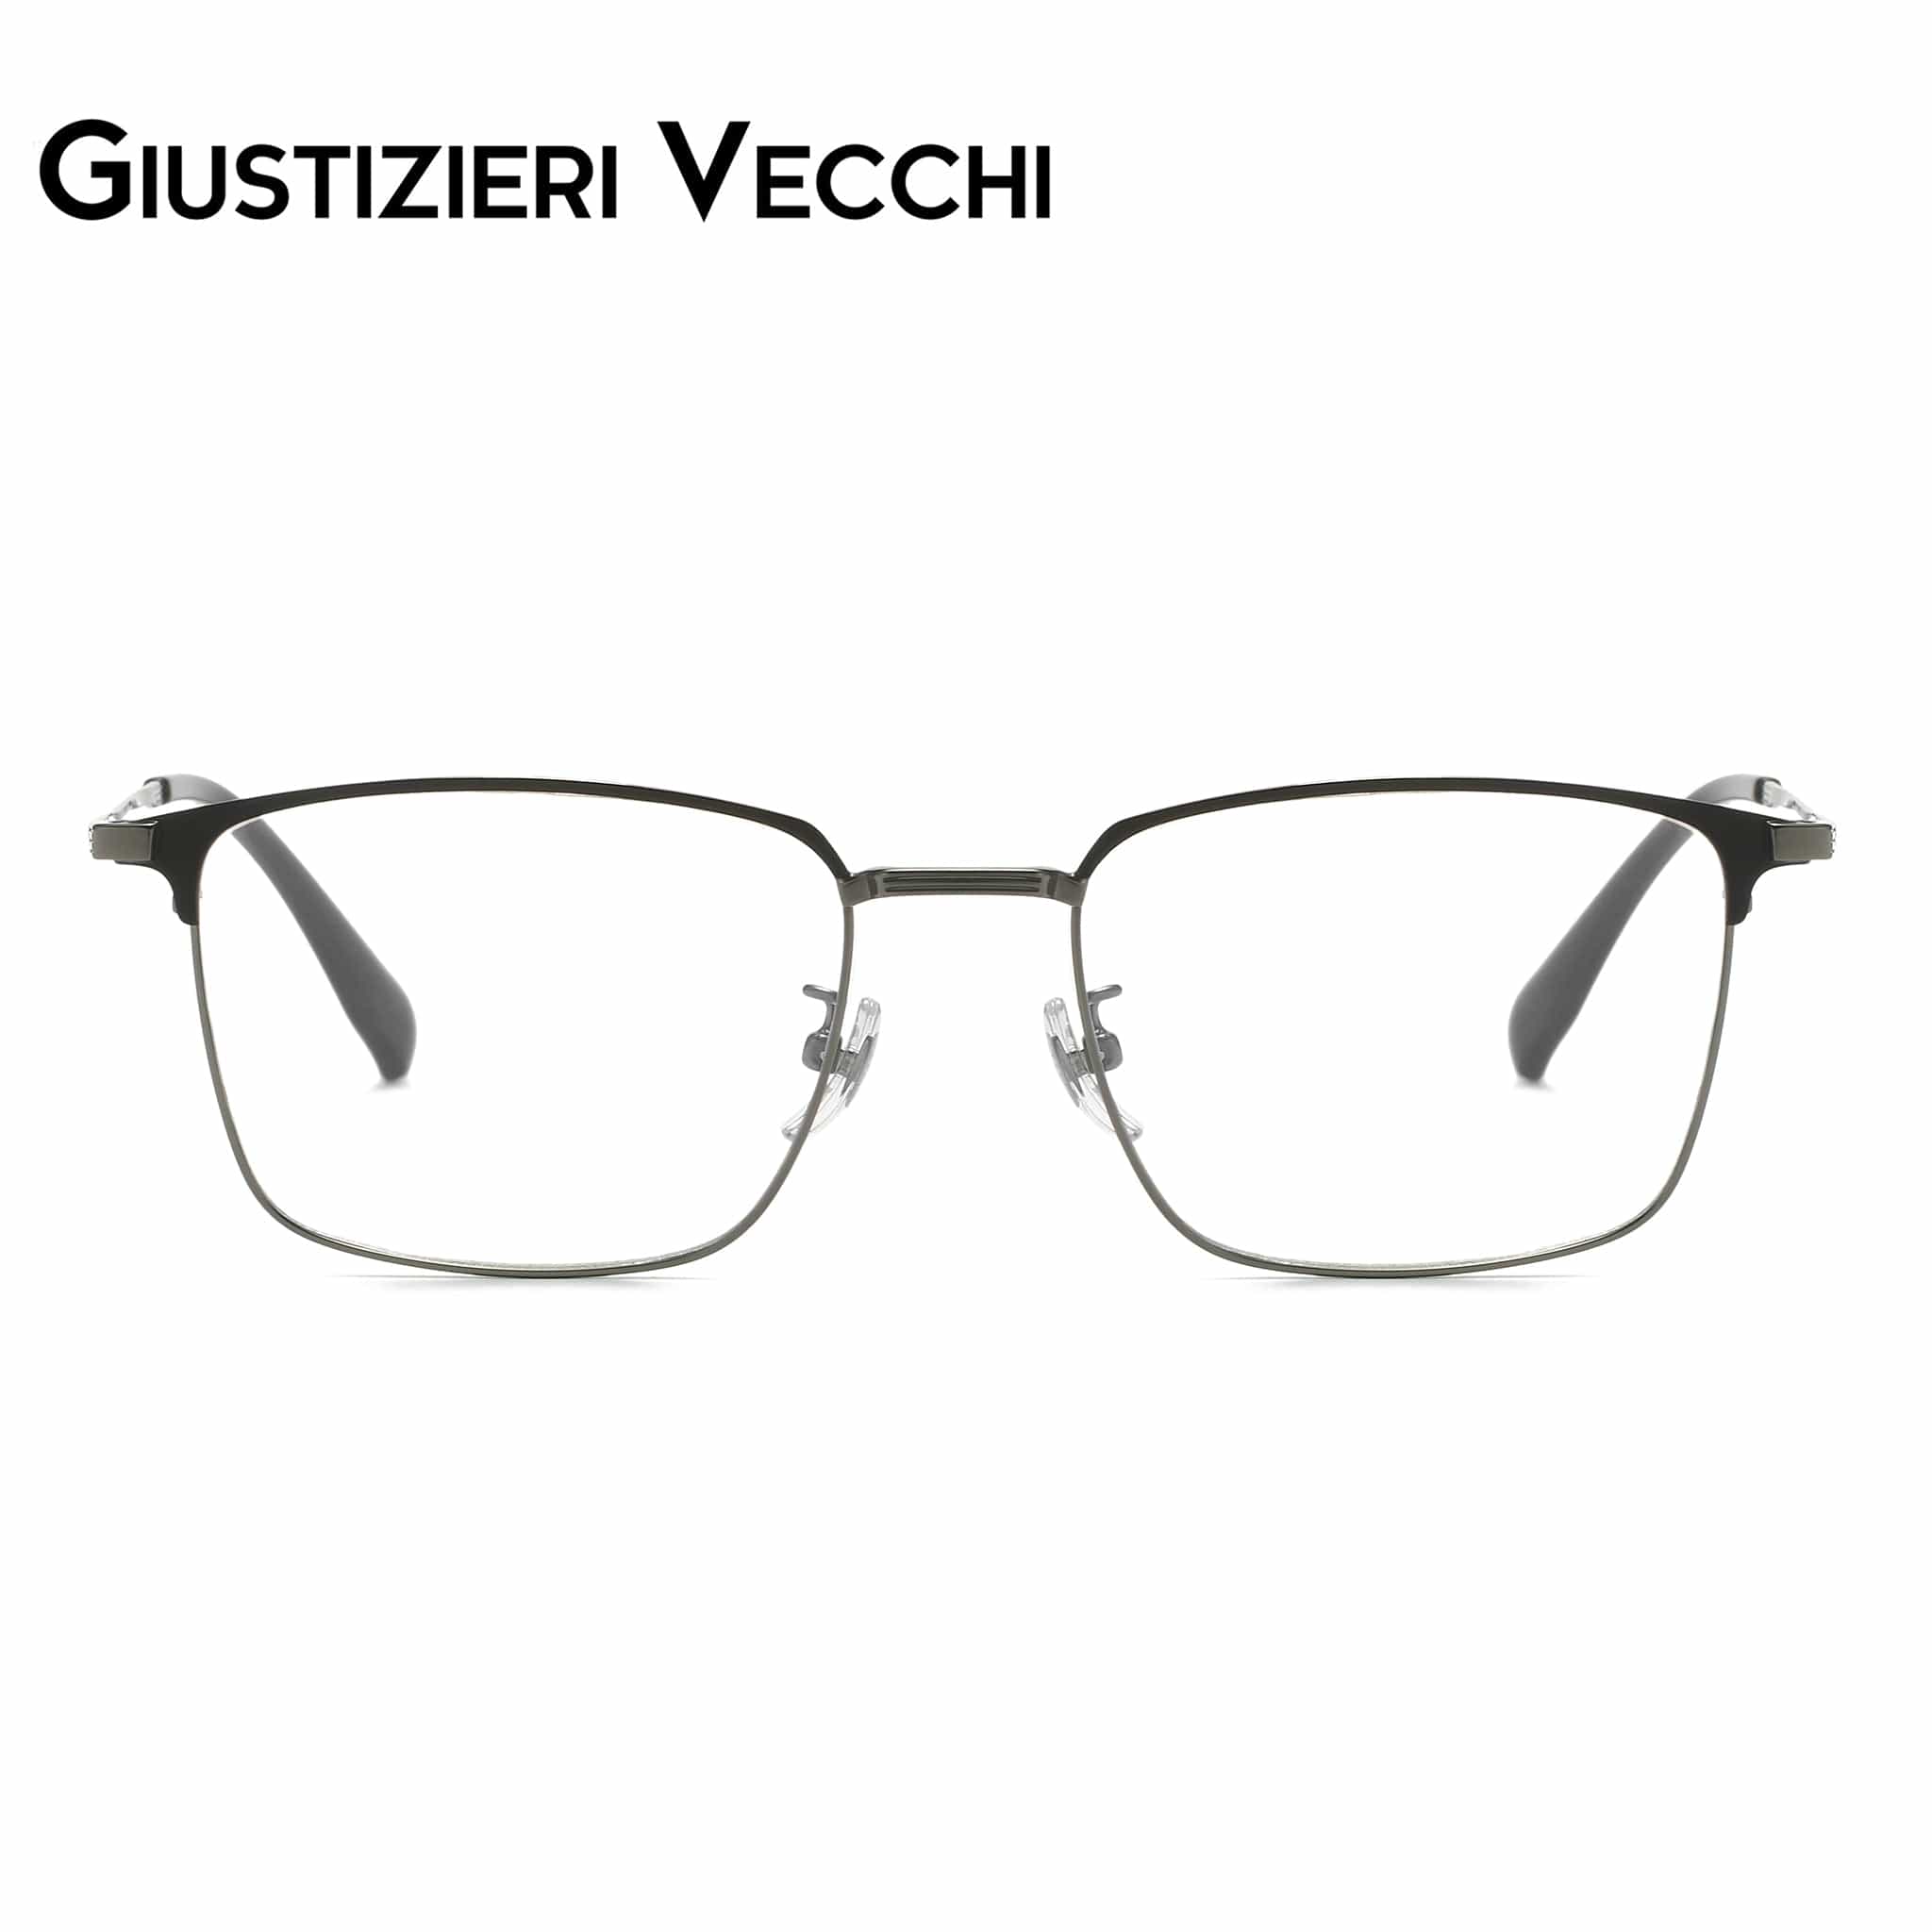 GIUSTIZIERI VECCHI Eyeglasses Medium / Black with Grey NovaBurst Duo